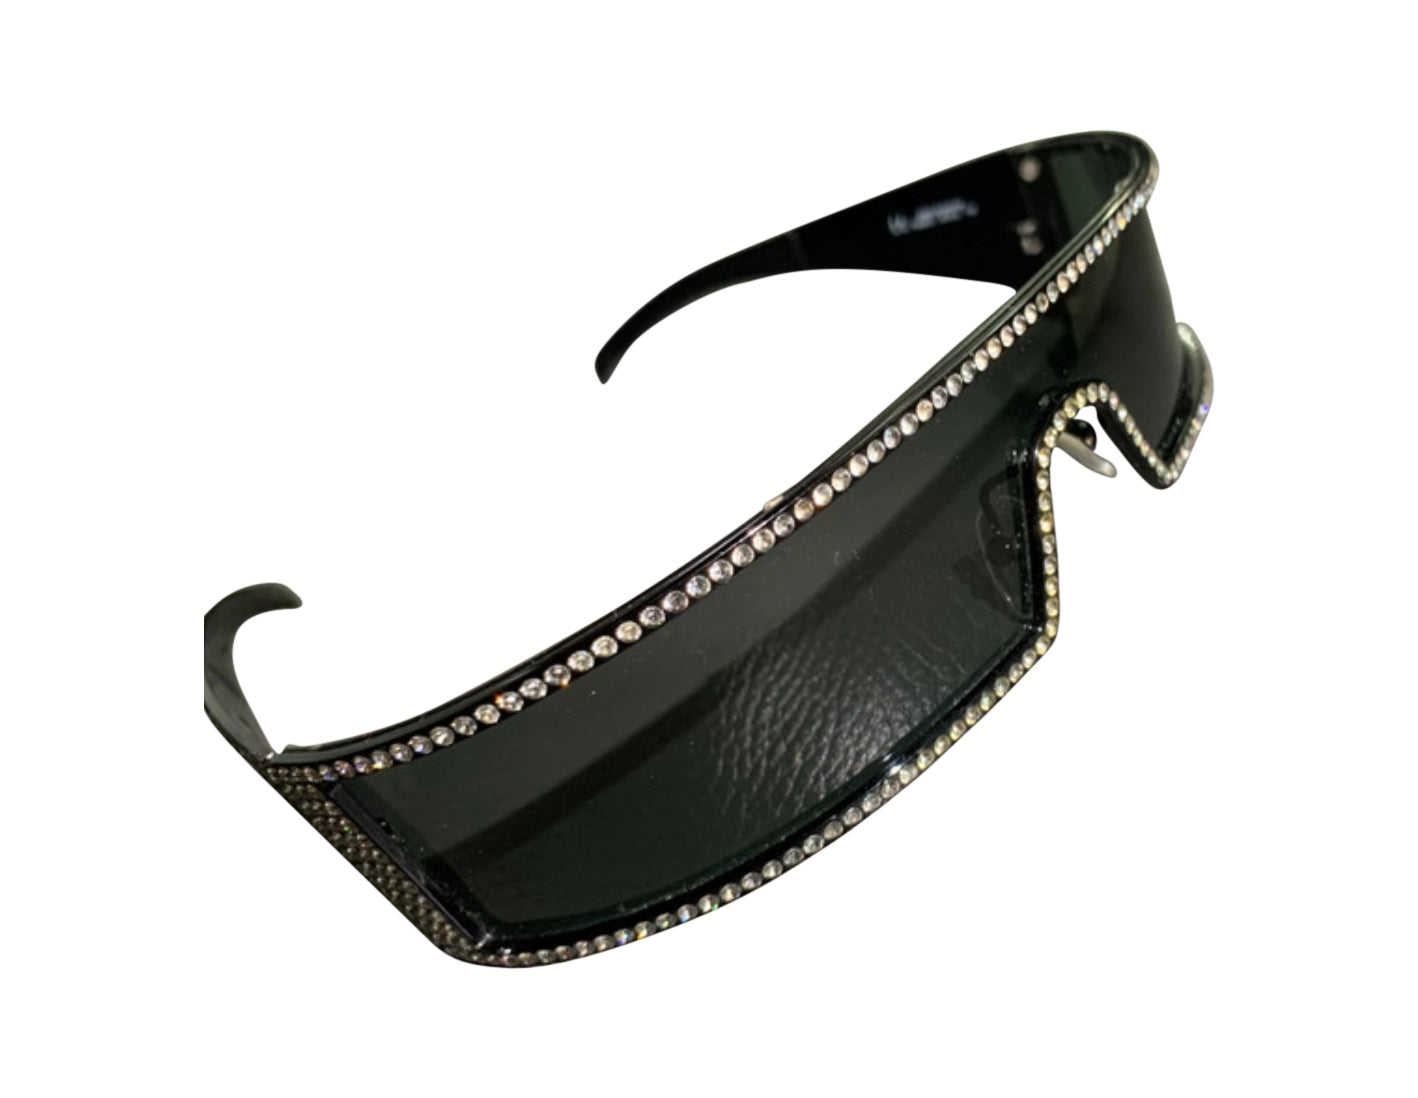 Christian Dior By John Galliano Swarovski Punk Sunglasses